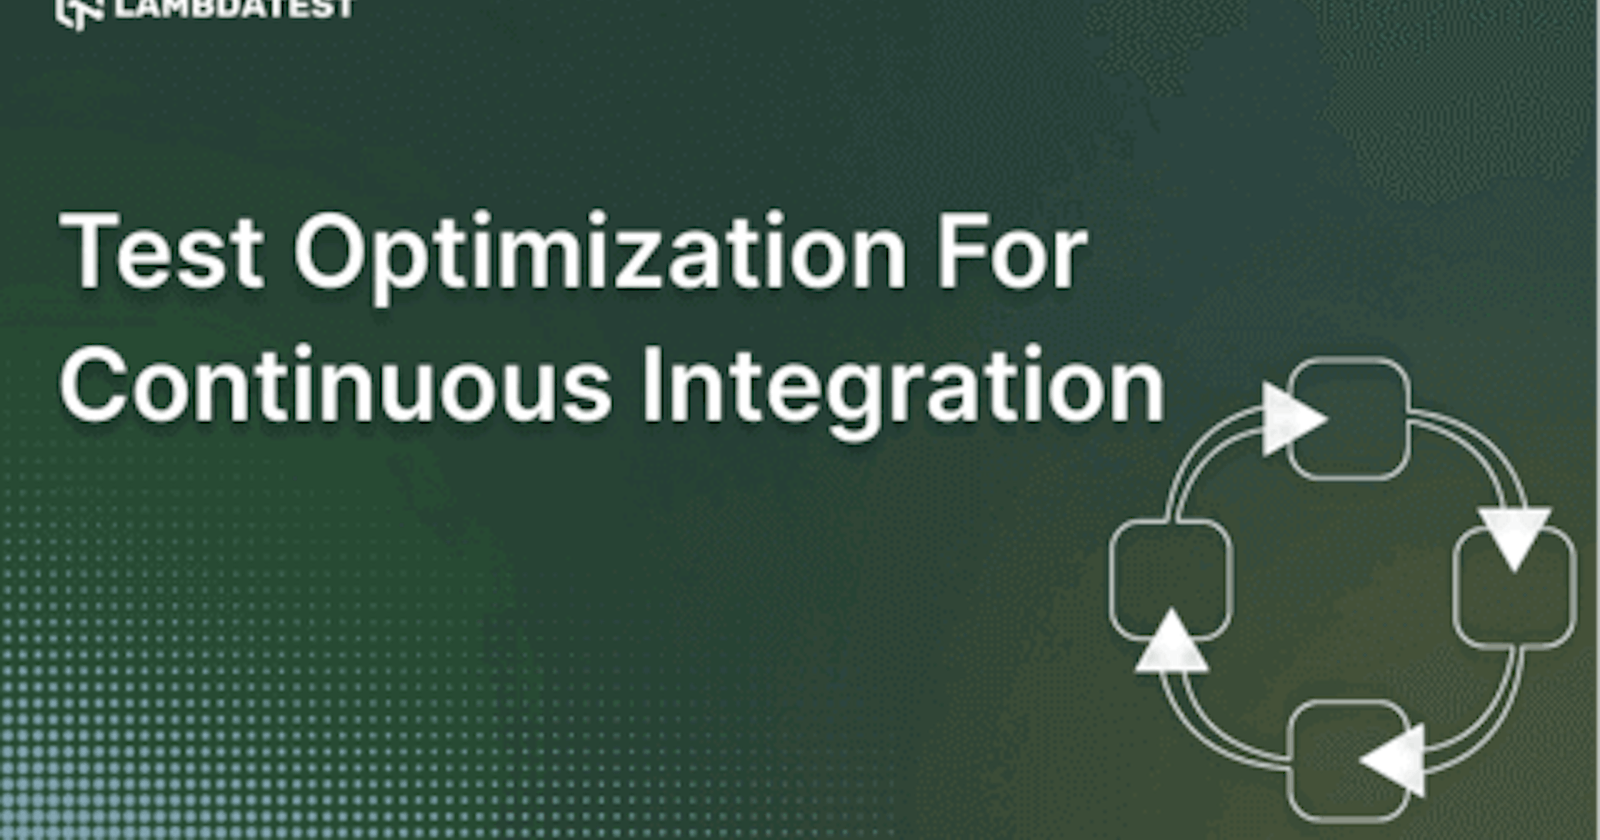 Test Optimization for Continuous Integration